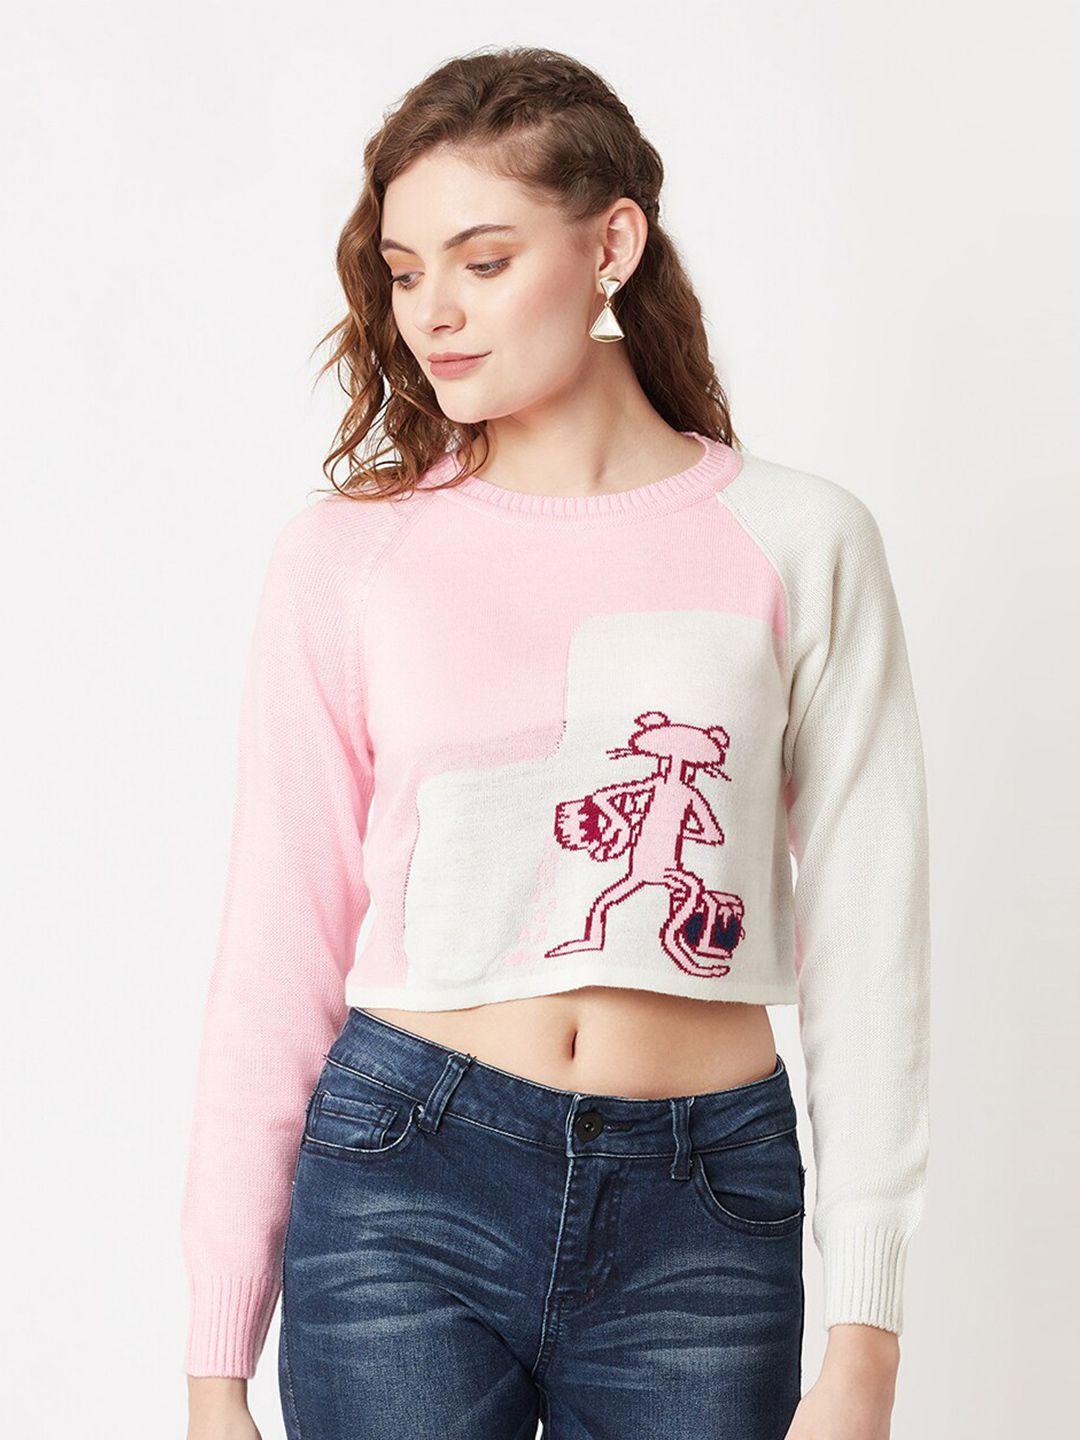 miramor women humour and comic self design acrylic crop pullover sweater